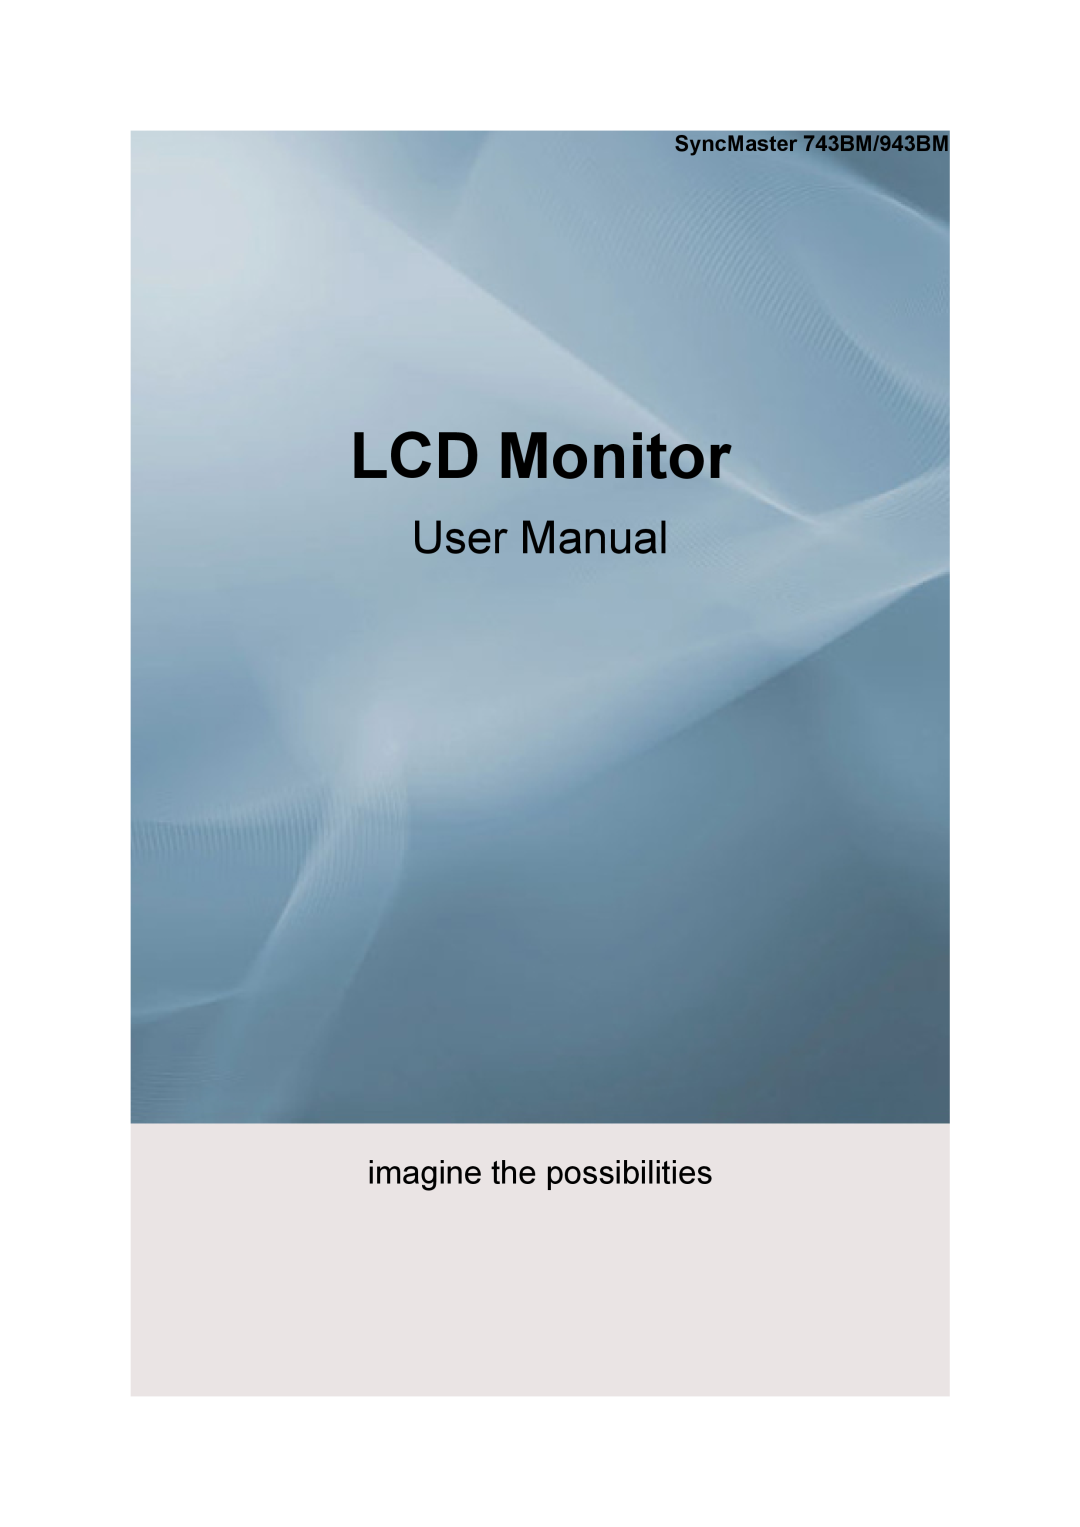 Sharp user manual SyncMaster 743BM/943BM, LCD Monitor, User Manual, imagine the possibilities 